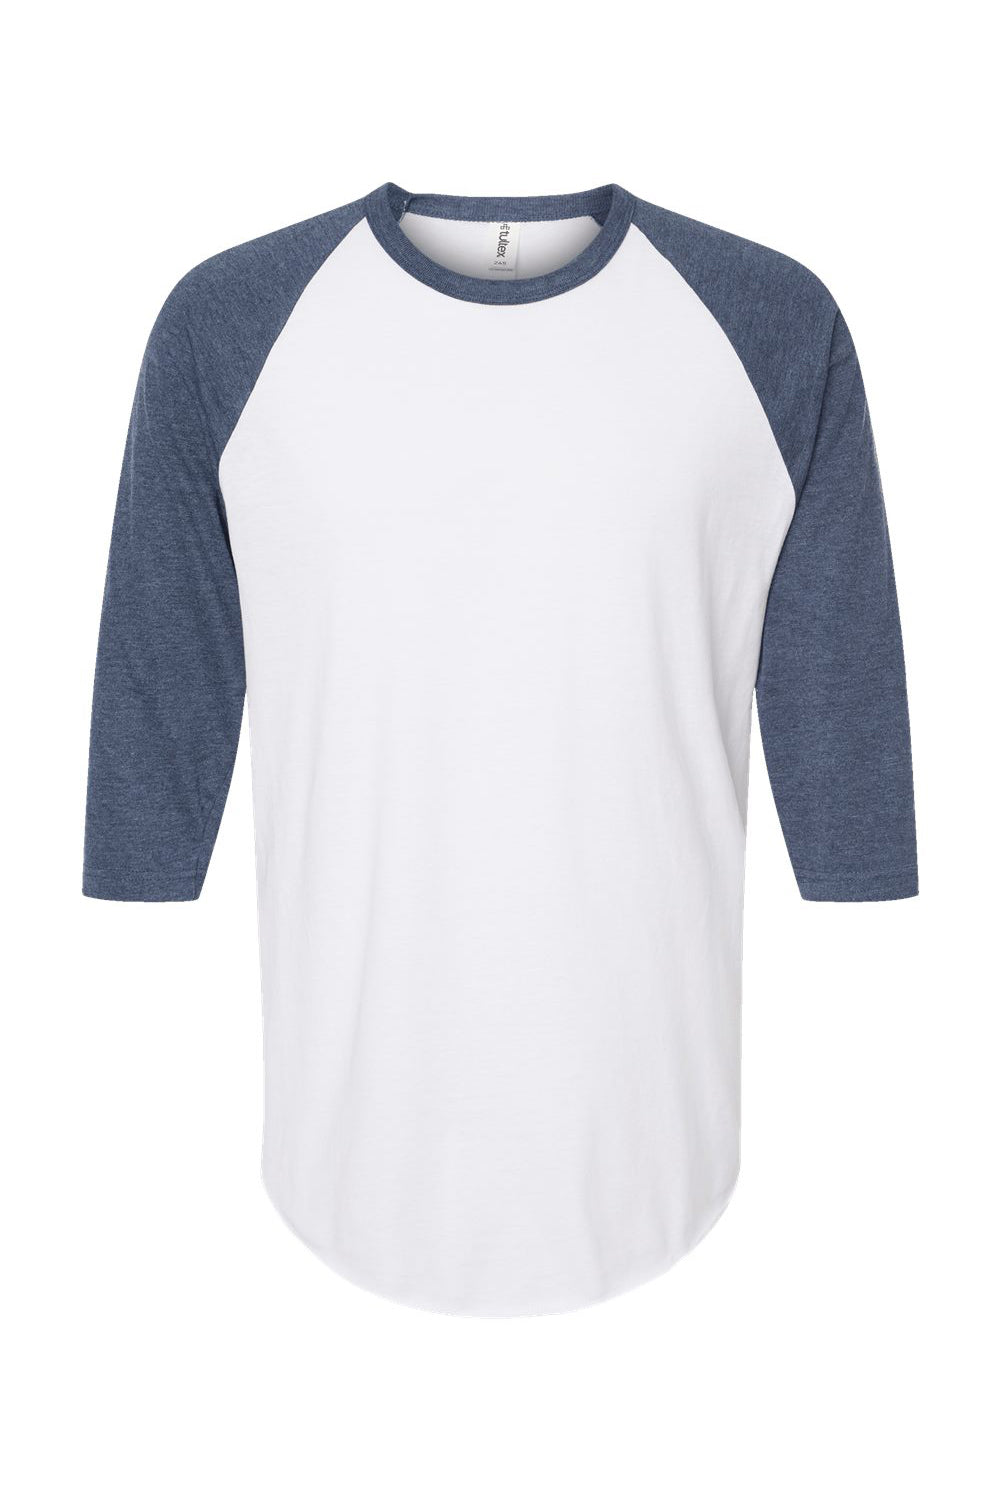 Tultex 245 Mens Fine Jersey Raglan 3/4 Sleeve Crewneck T-Shirt White/Heather Denim Blue Flat Front